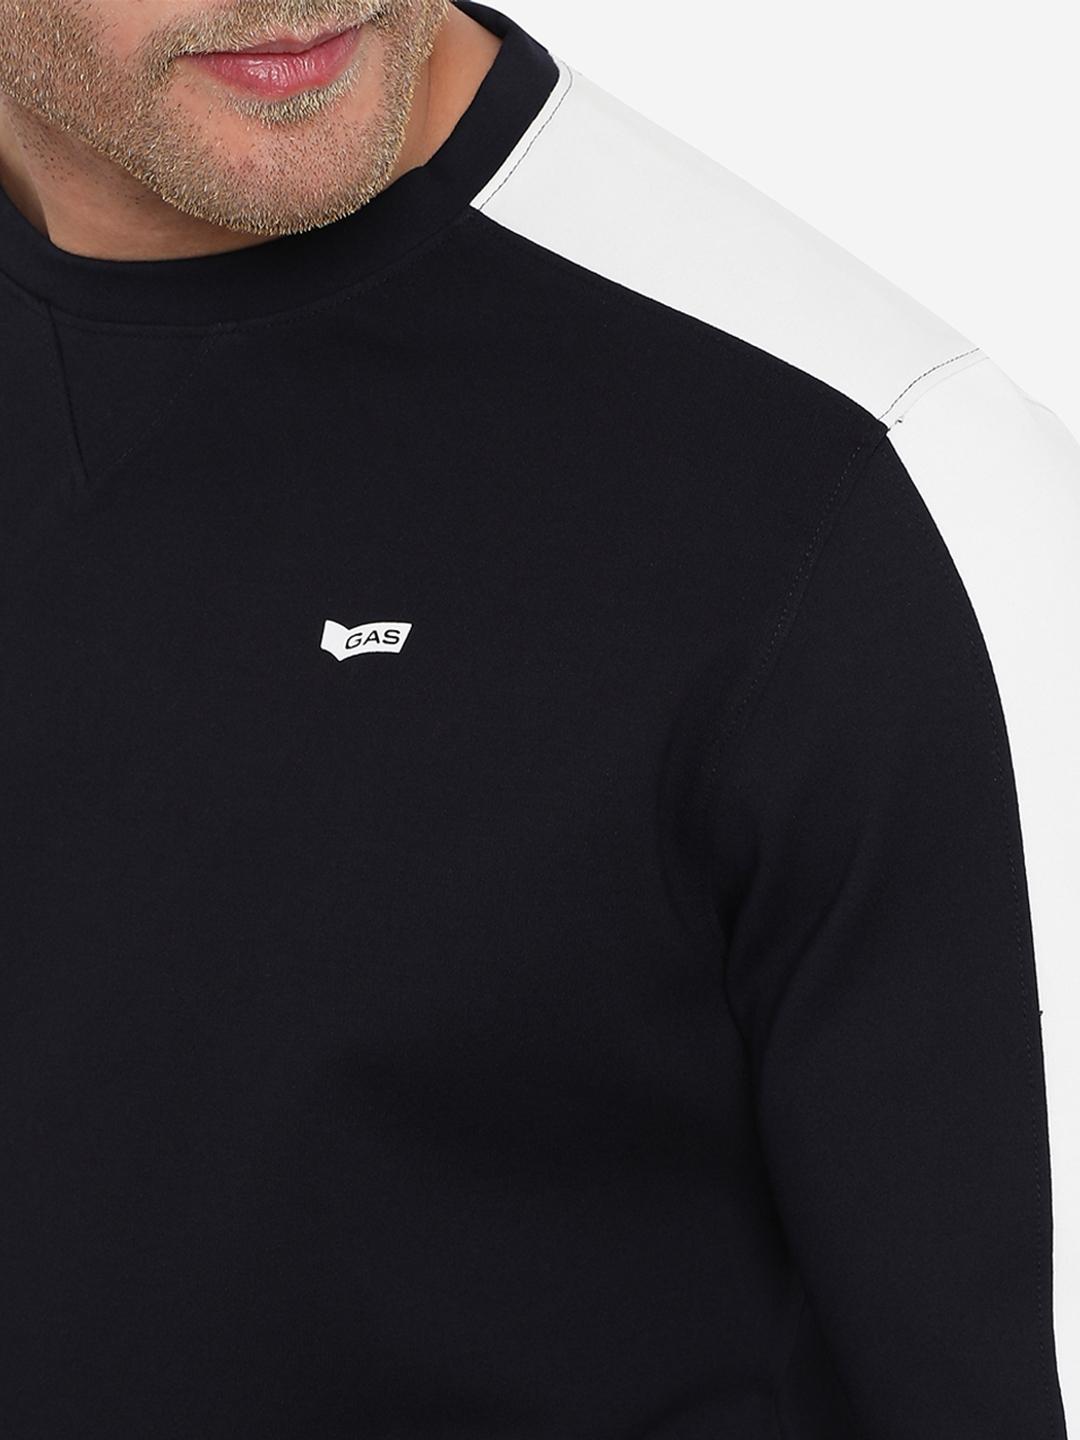 Slim Fit Crew-Neck Sweatshirt with Contrast Panel